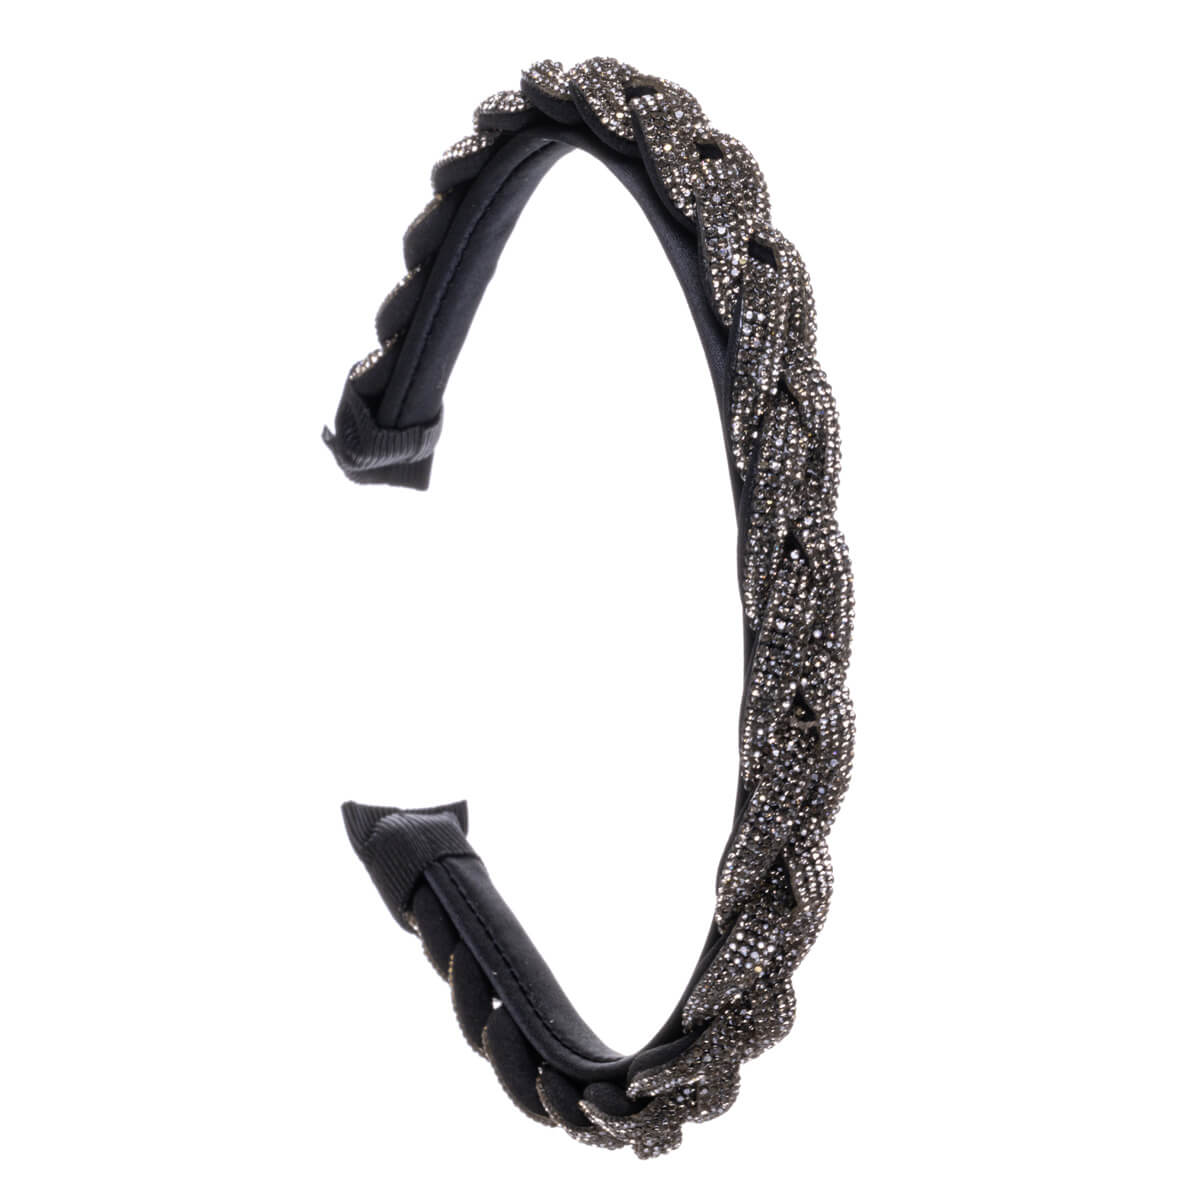 Glass stone decorated braided collar hairband 1,5cm